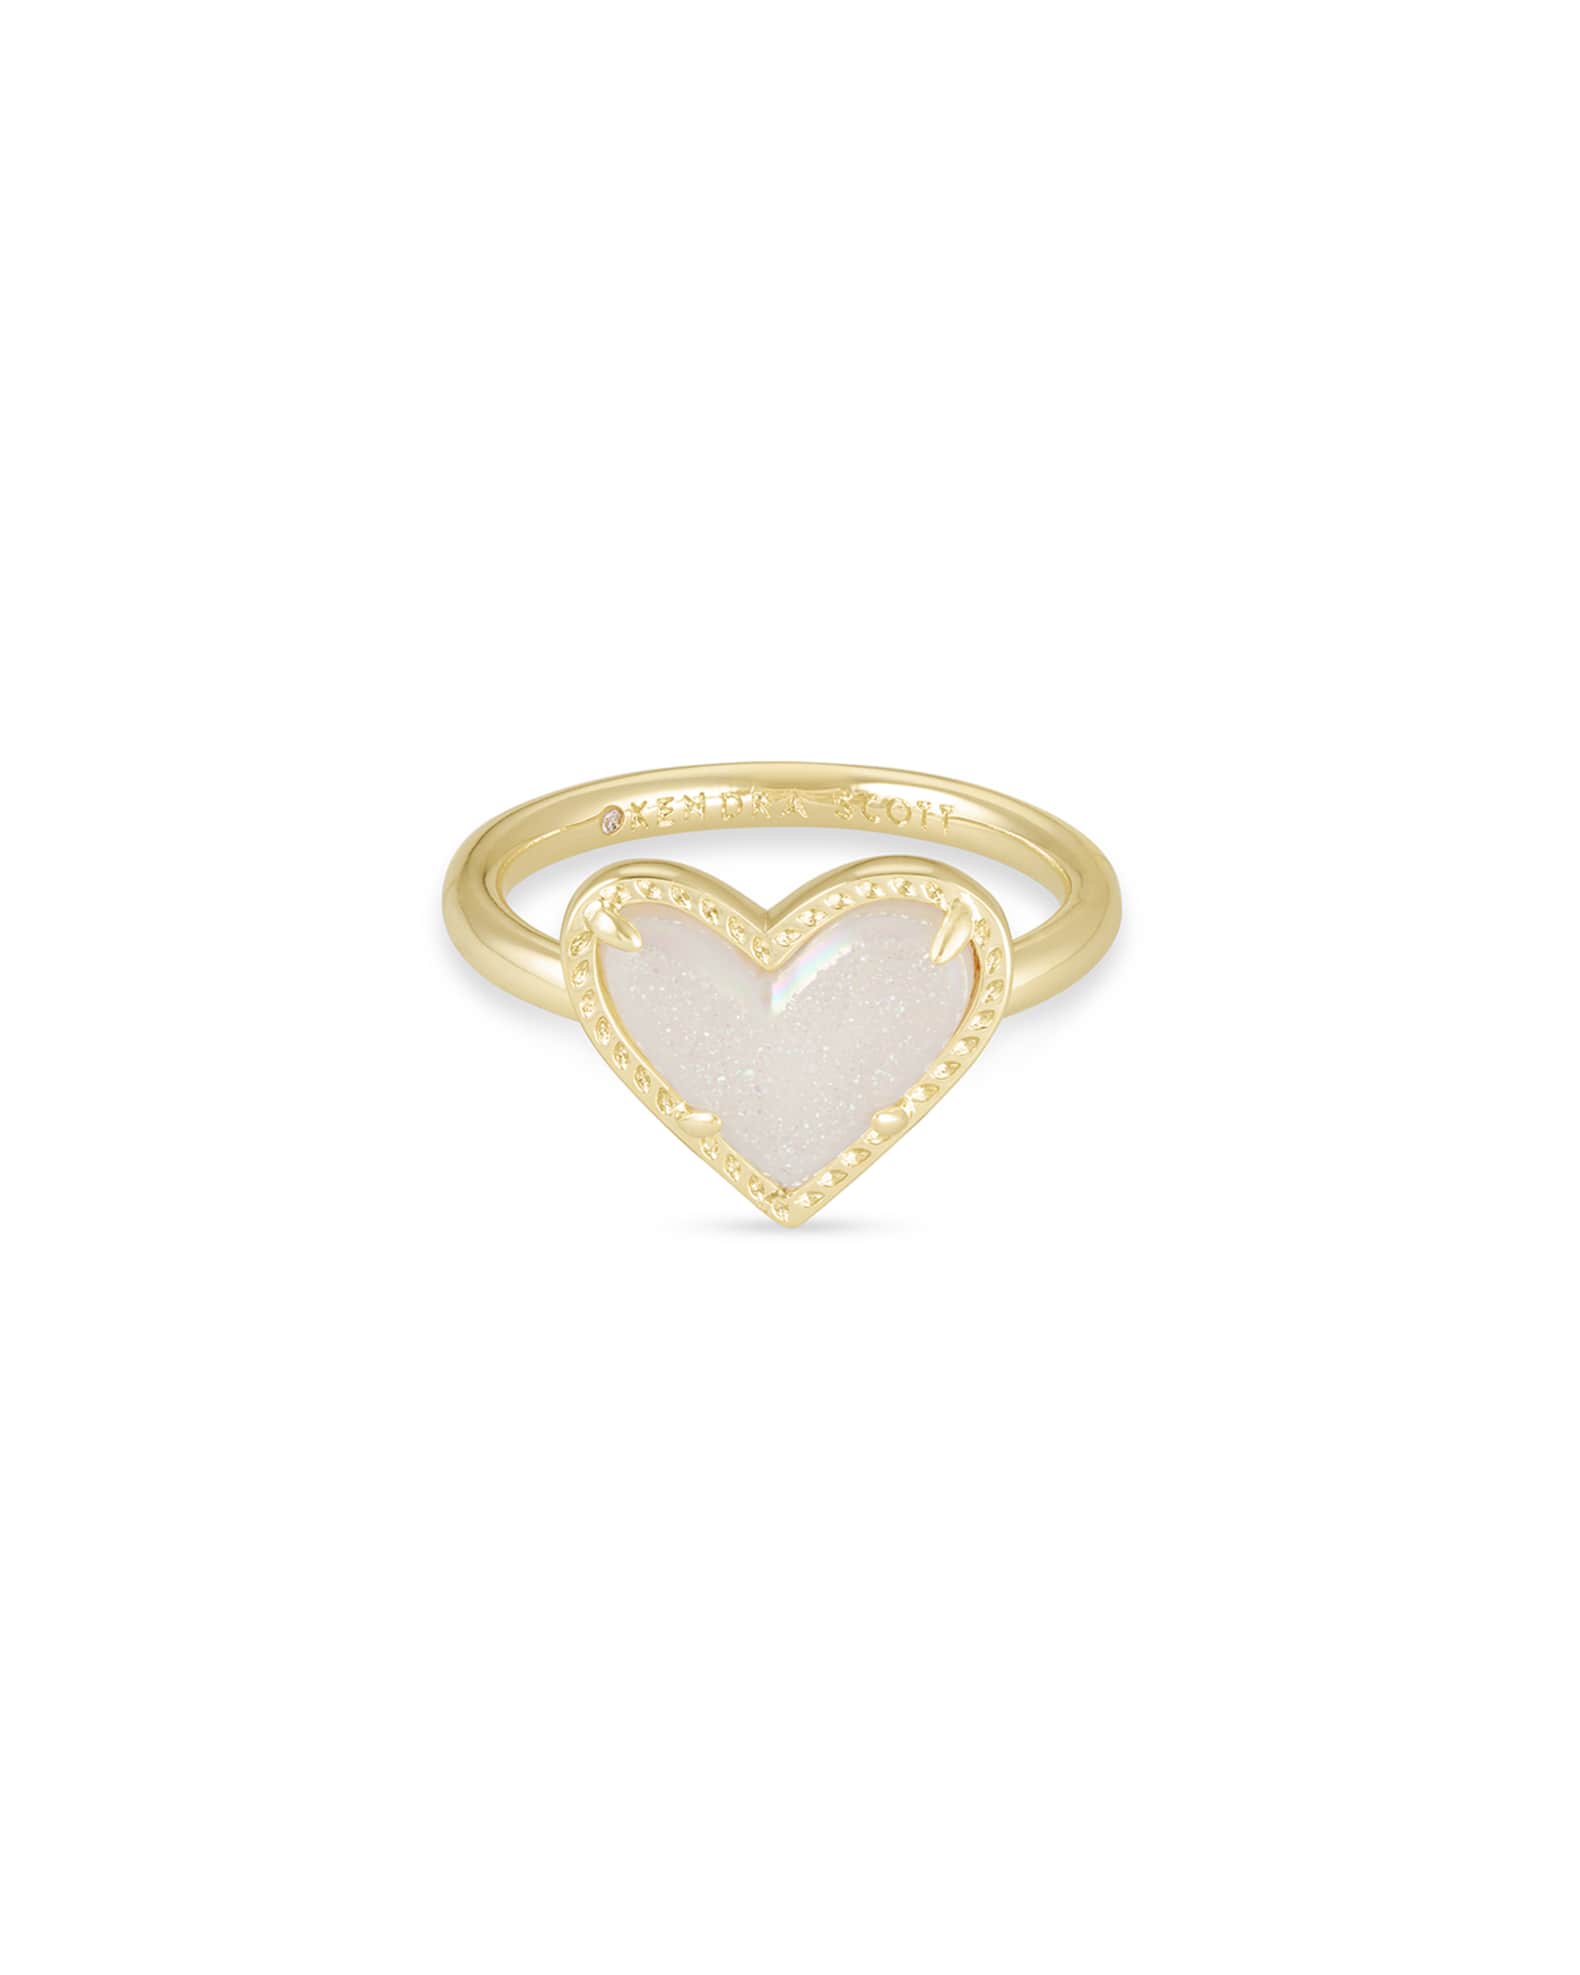 Ari Heart Band Ring, Size 6-8